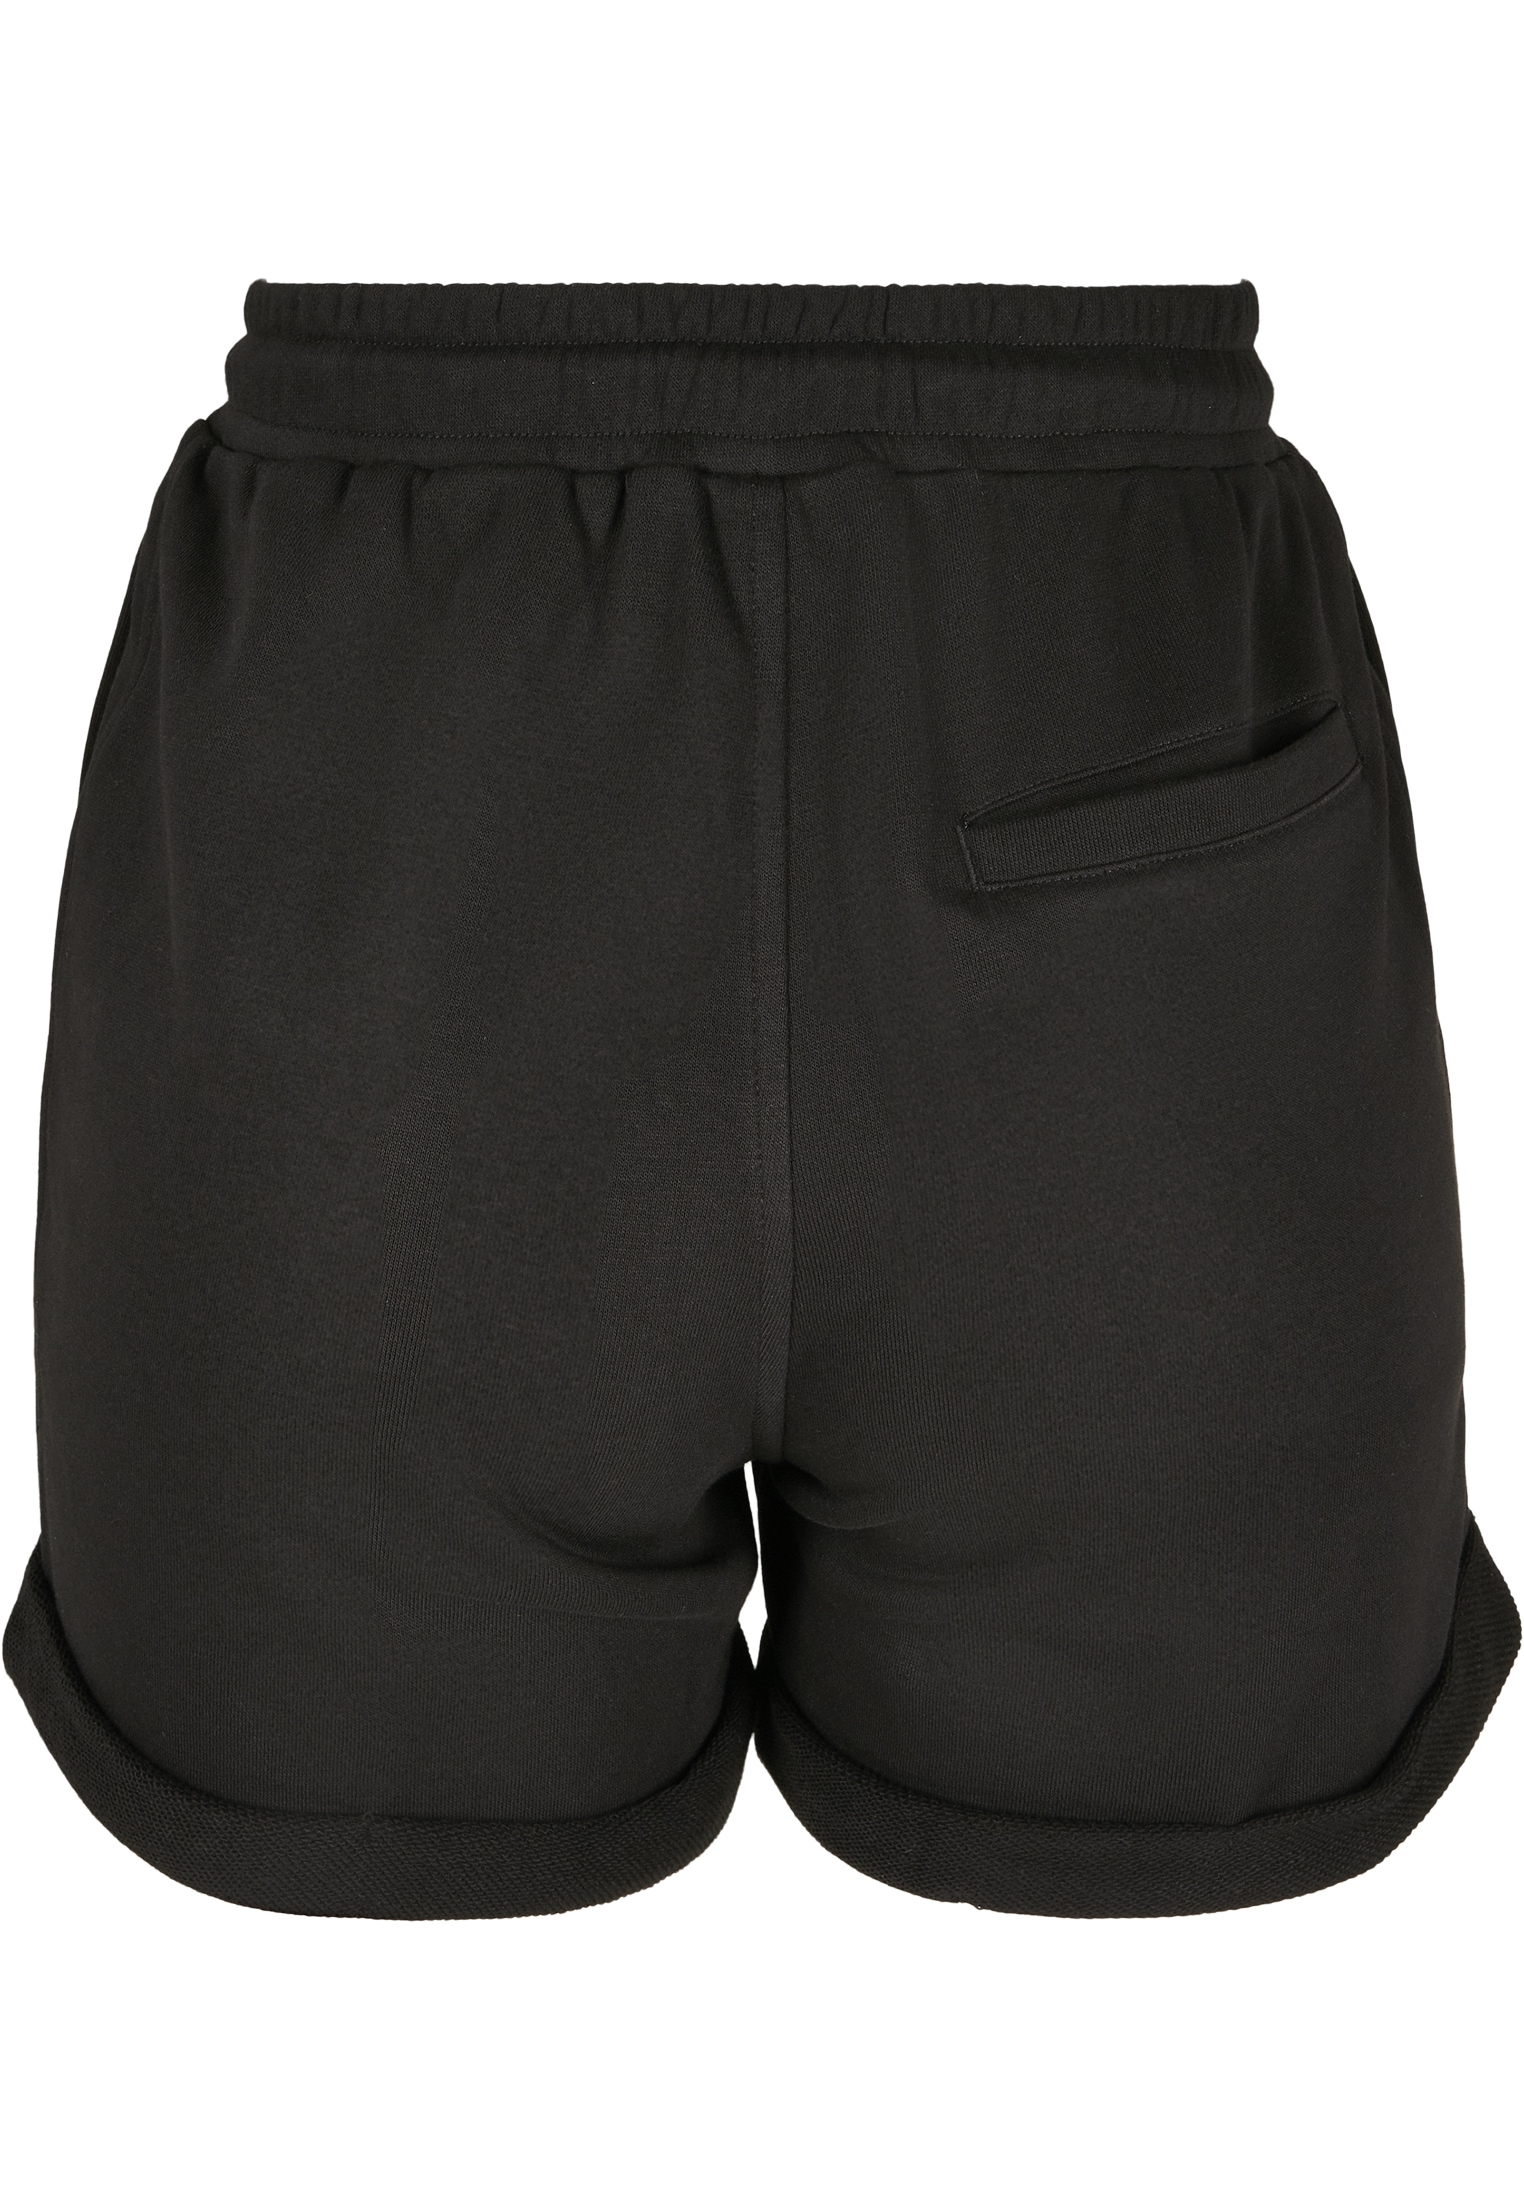 (1 Terry Beach tlg.) Ladies Stoffhose URBAN shoppen Shorts«, »Damen CLASSICS